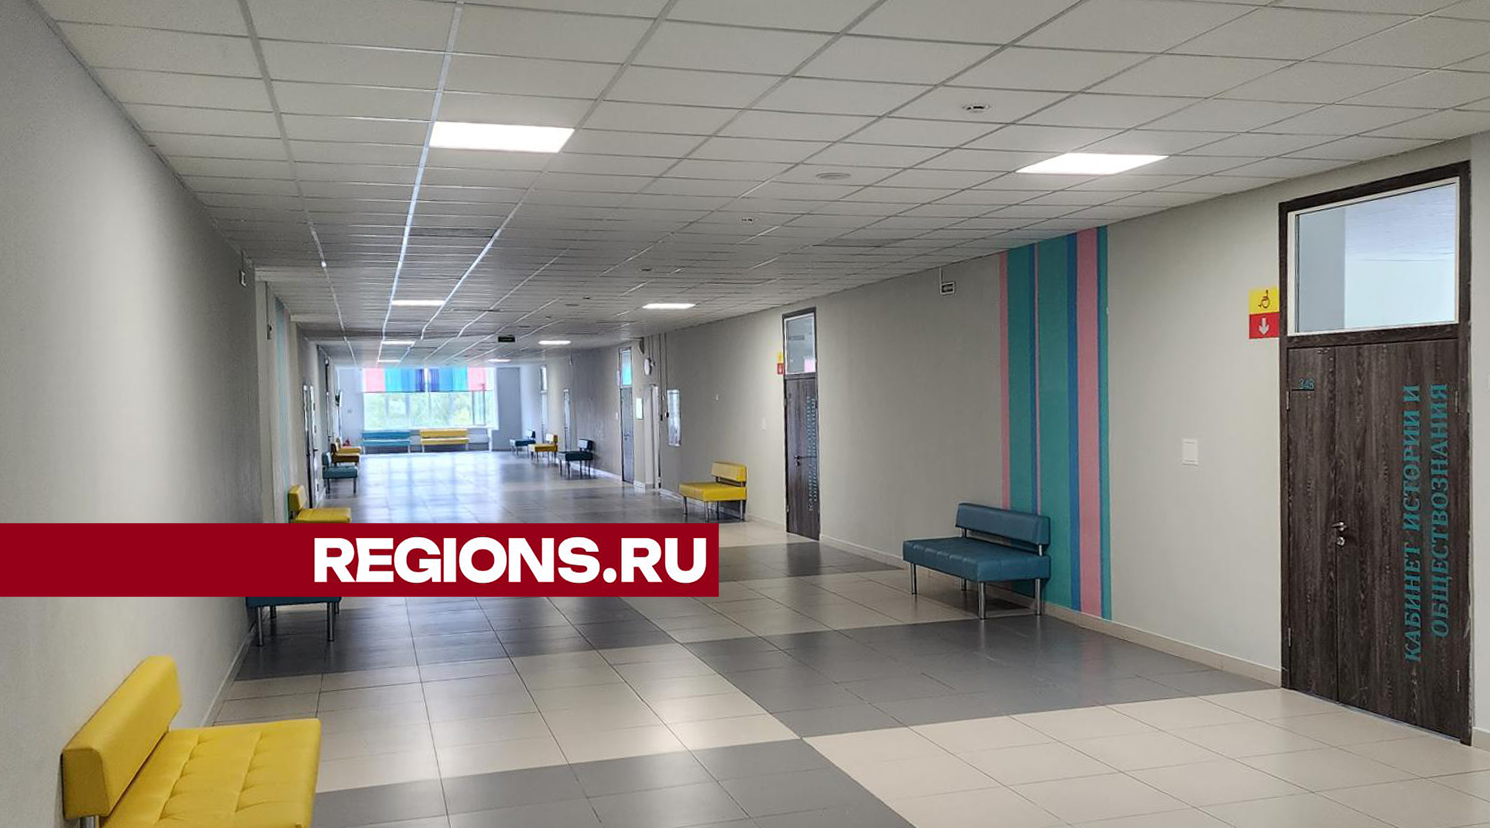 Три школы отремонтируют в Пушкинском округе до конца года